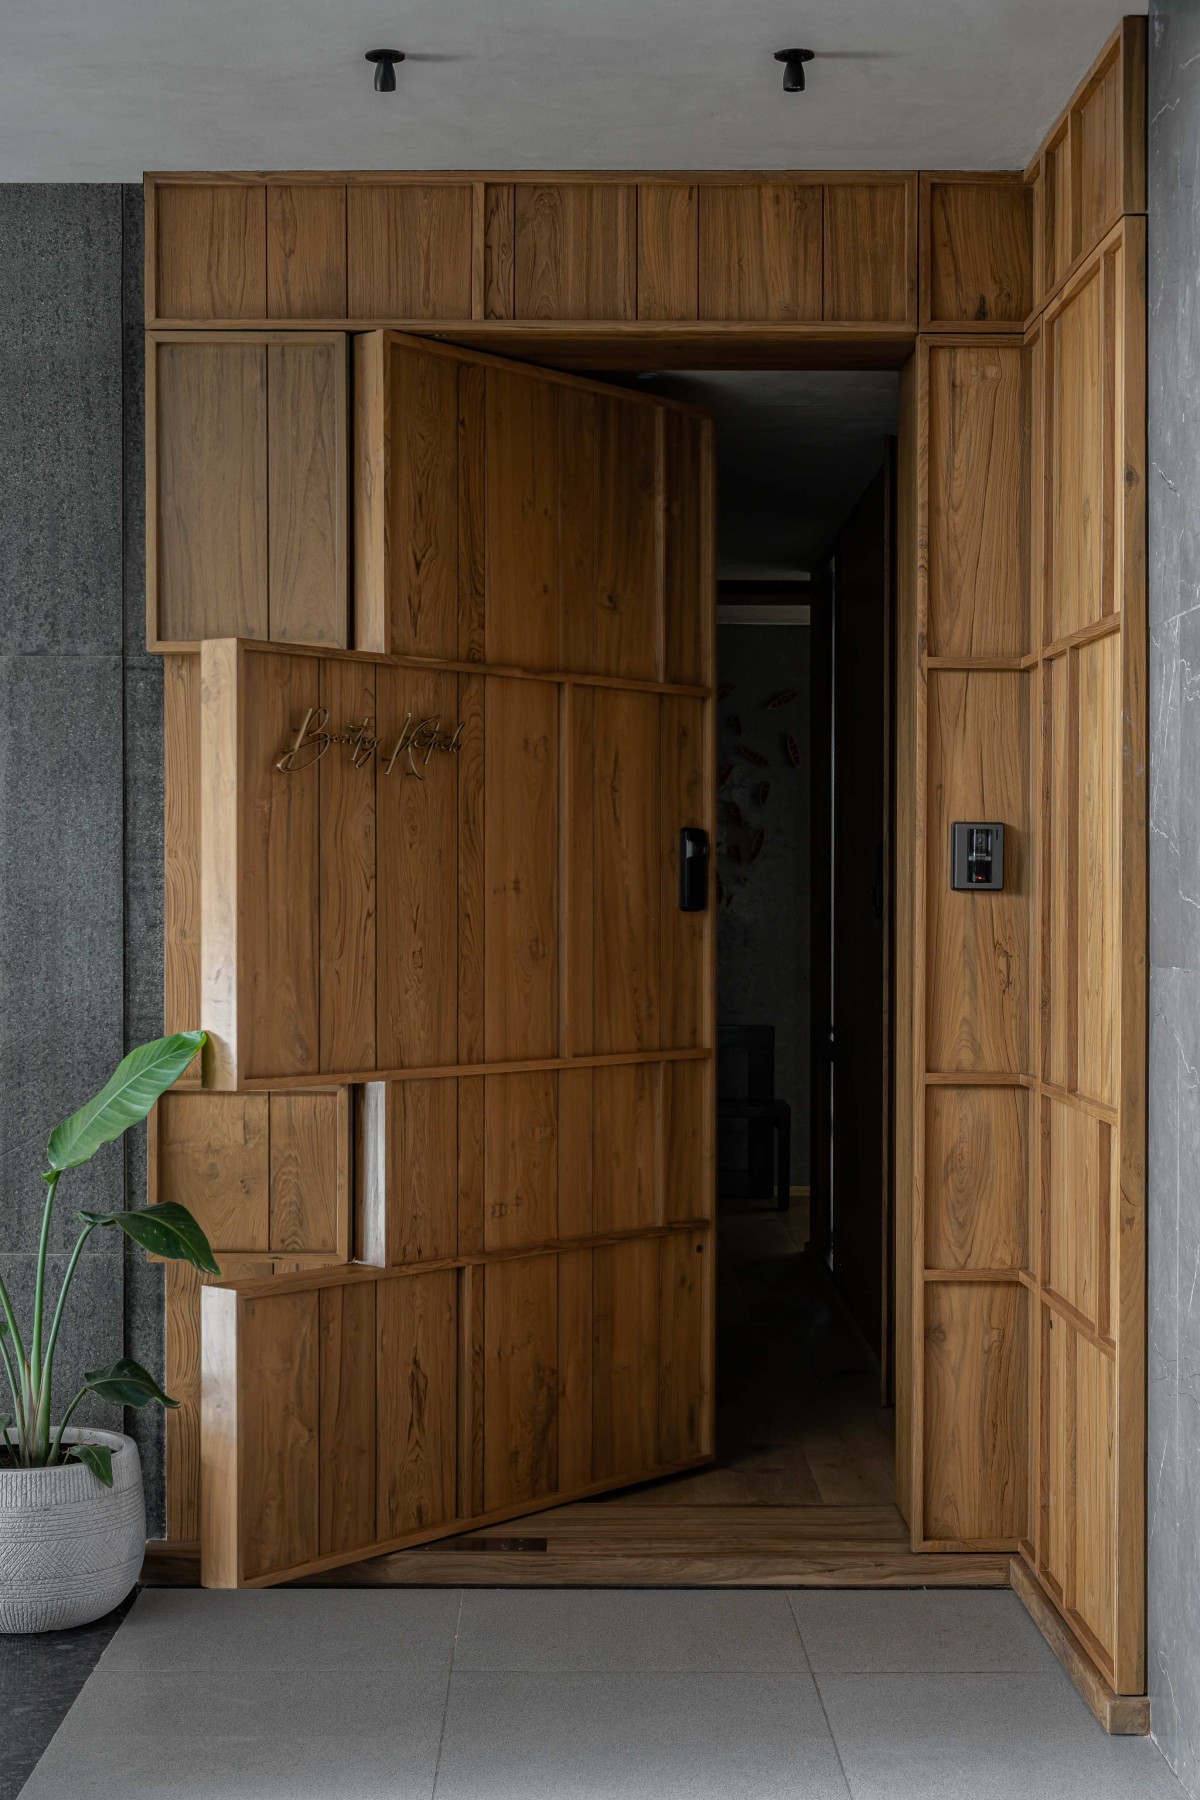 Entrance of Bonty Ketak by Sharan Architecture + Design